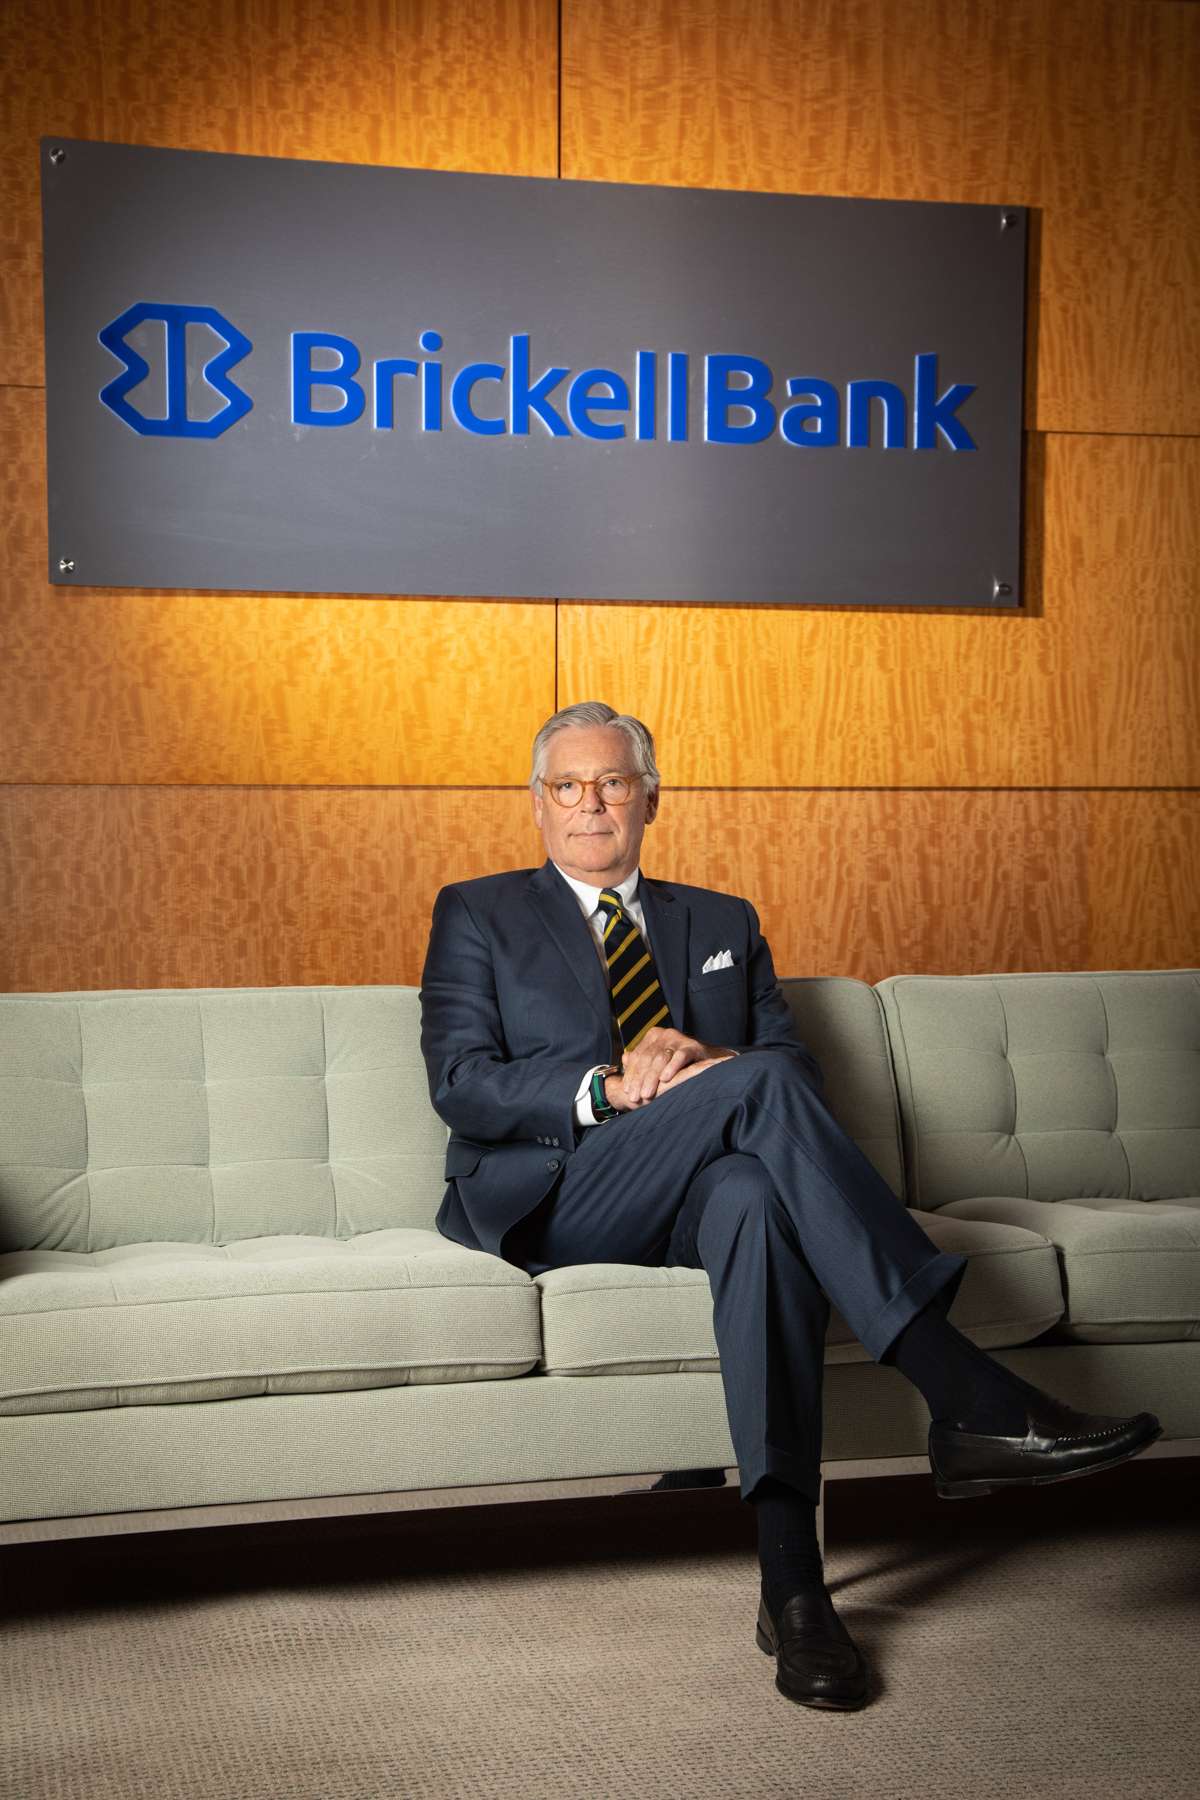 Brickell Bank